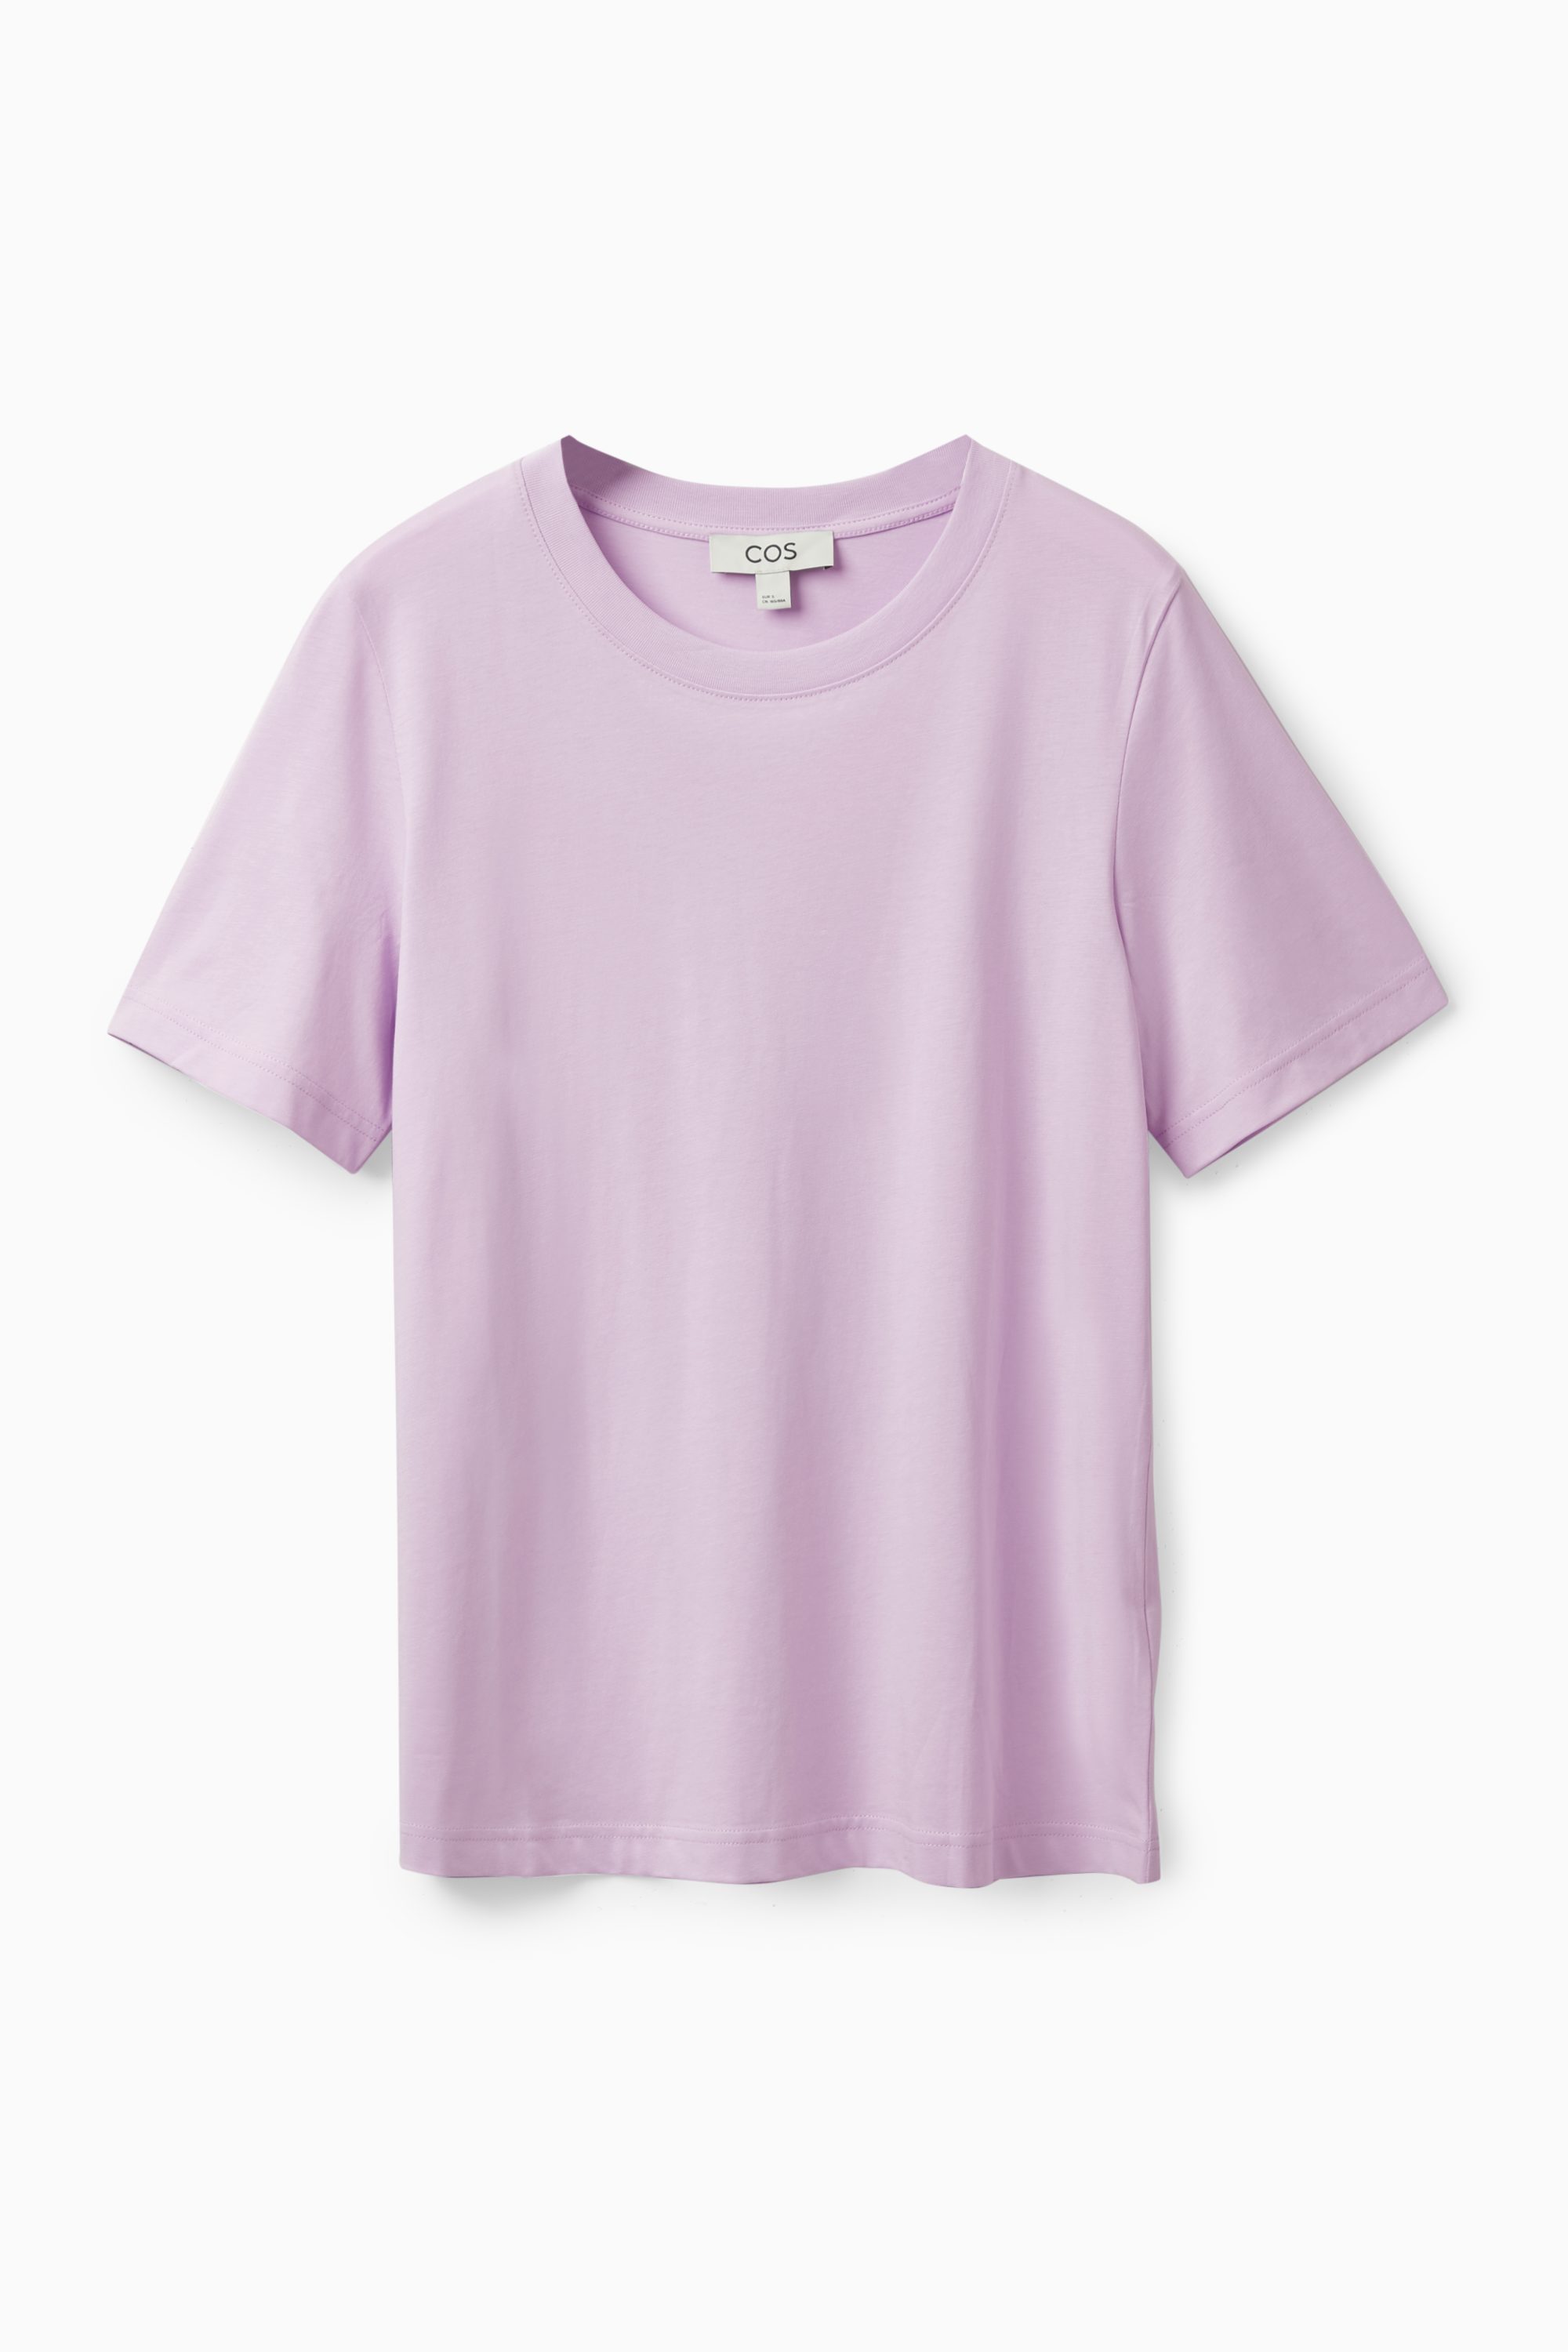 women | AU COS t-shirt - Regular - LILAC fit